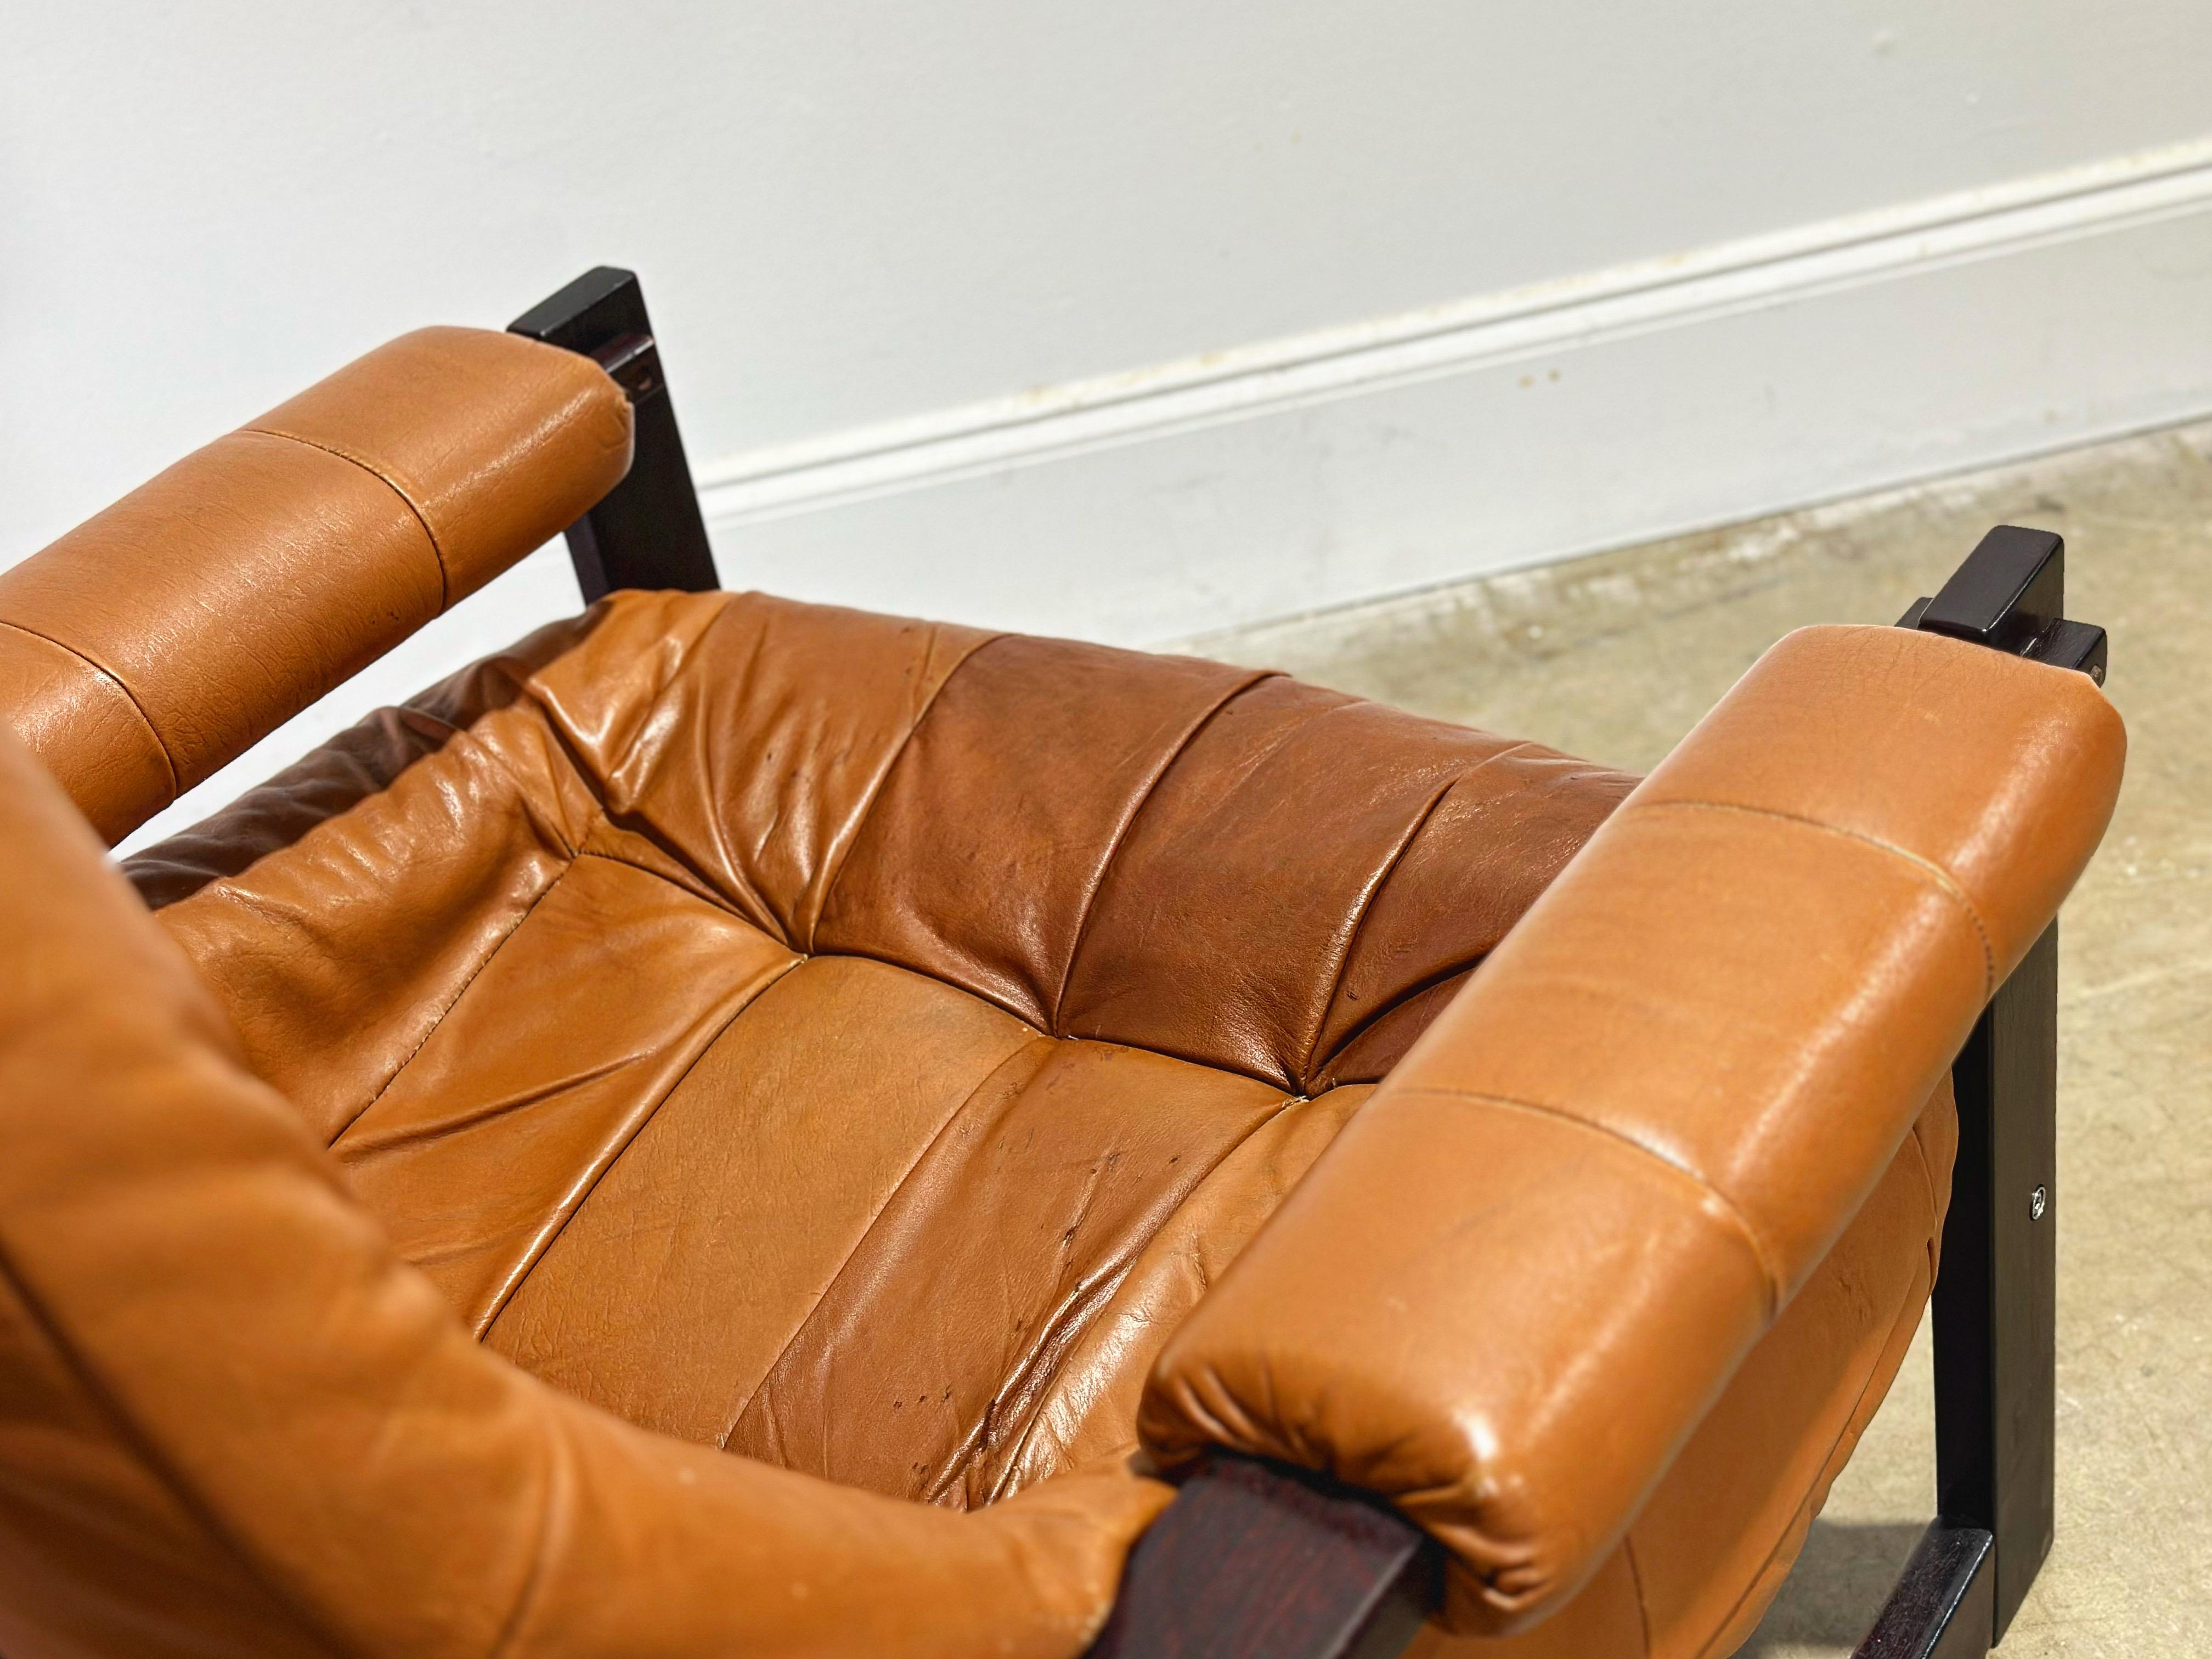 Brazilian Percival Lafer Earth Chair, Cognac Leather + Jacaranda Wood Midcentury Lounge